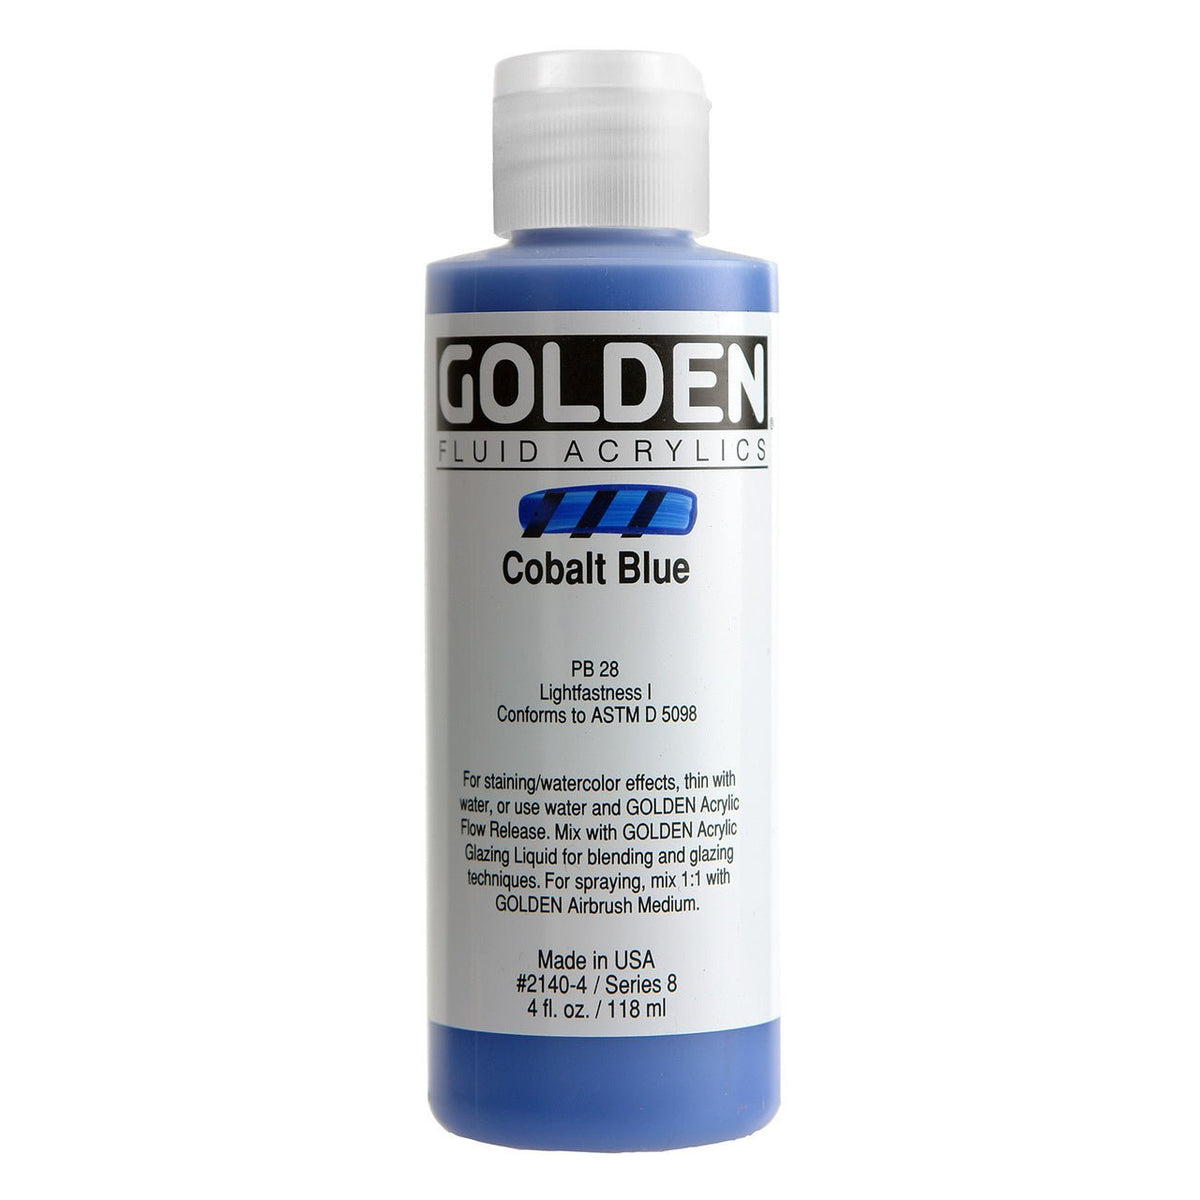 Golden Fluid Acrylic Cobalt Blue 4 oz - merriartist.com